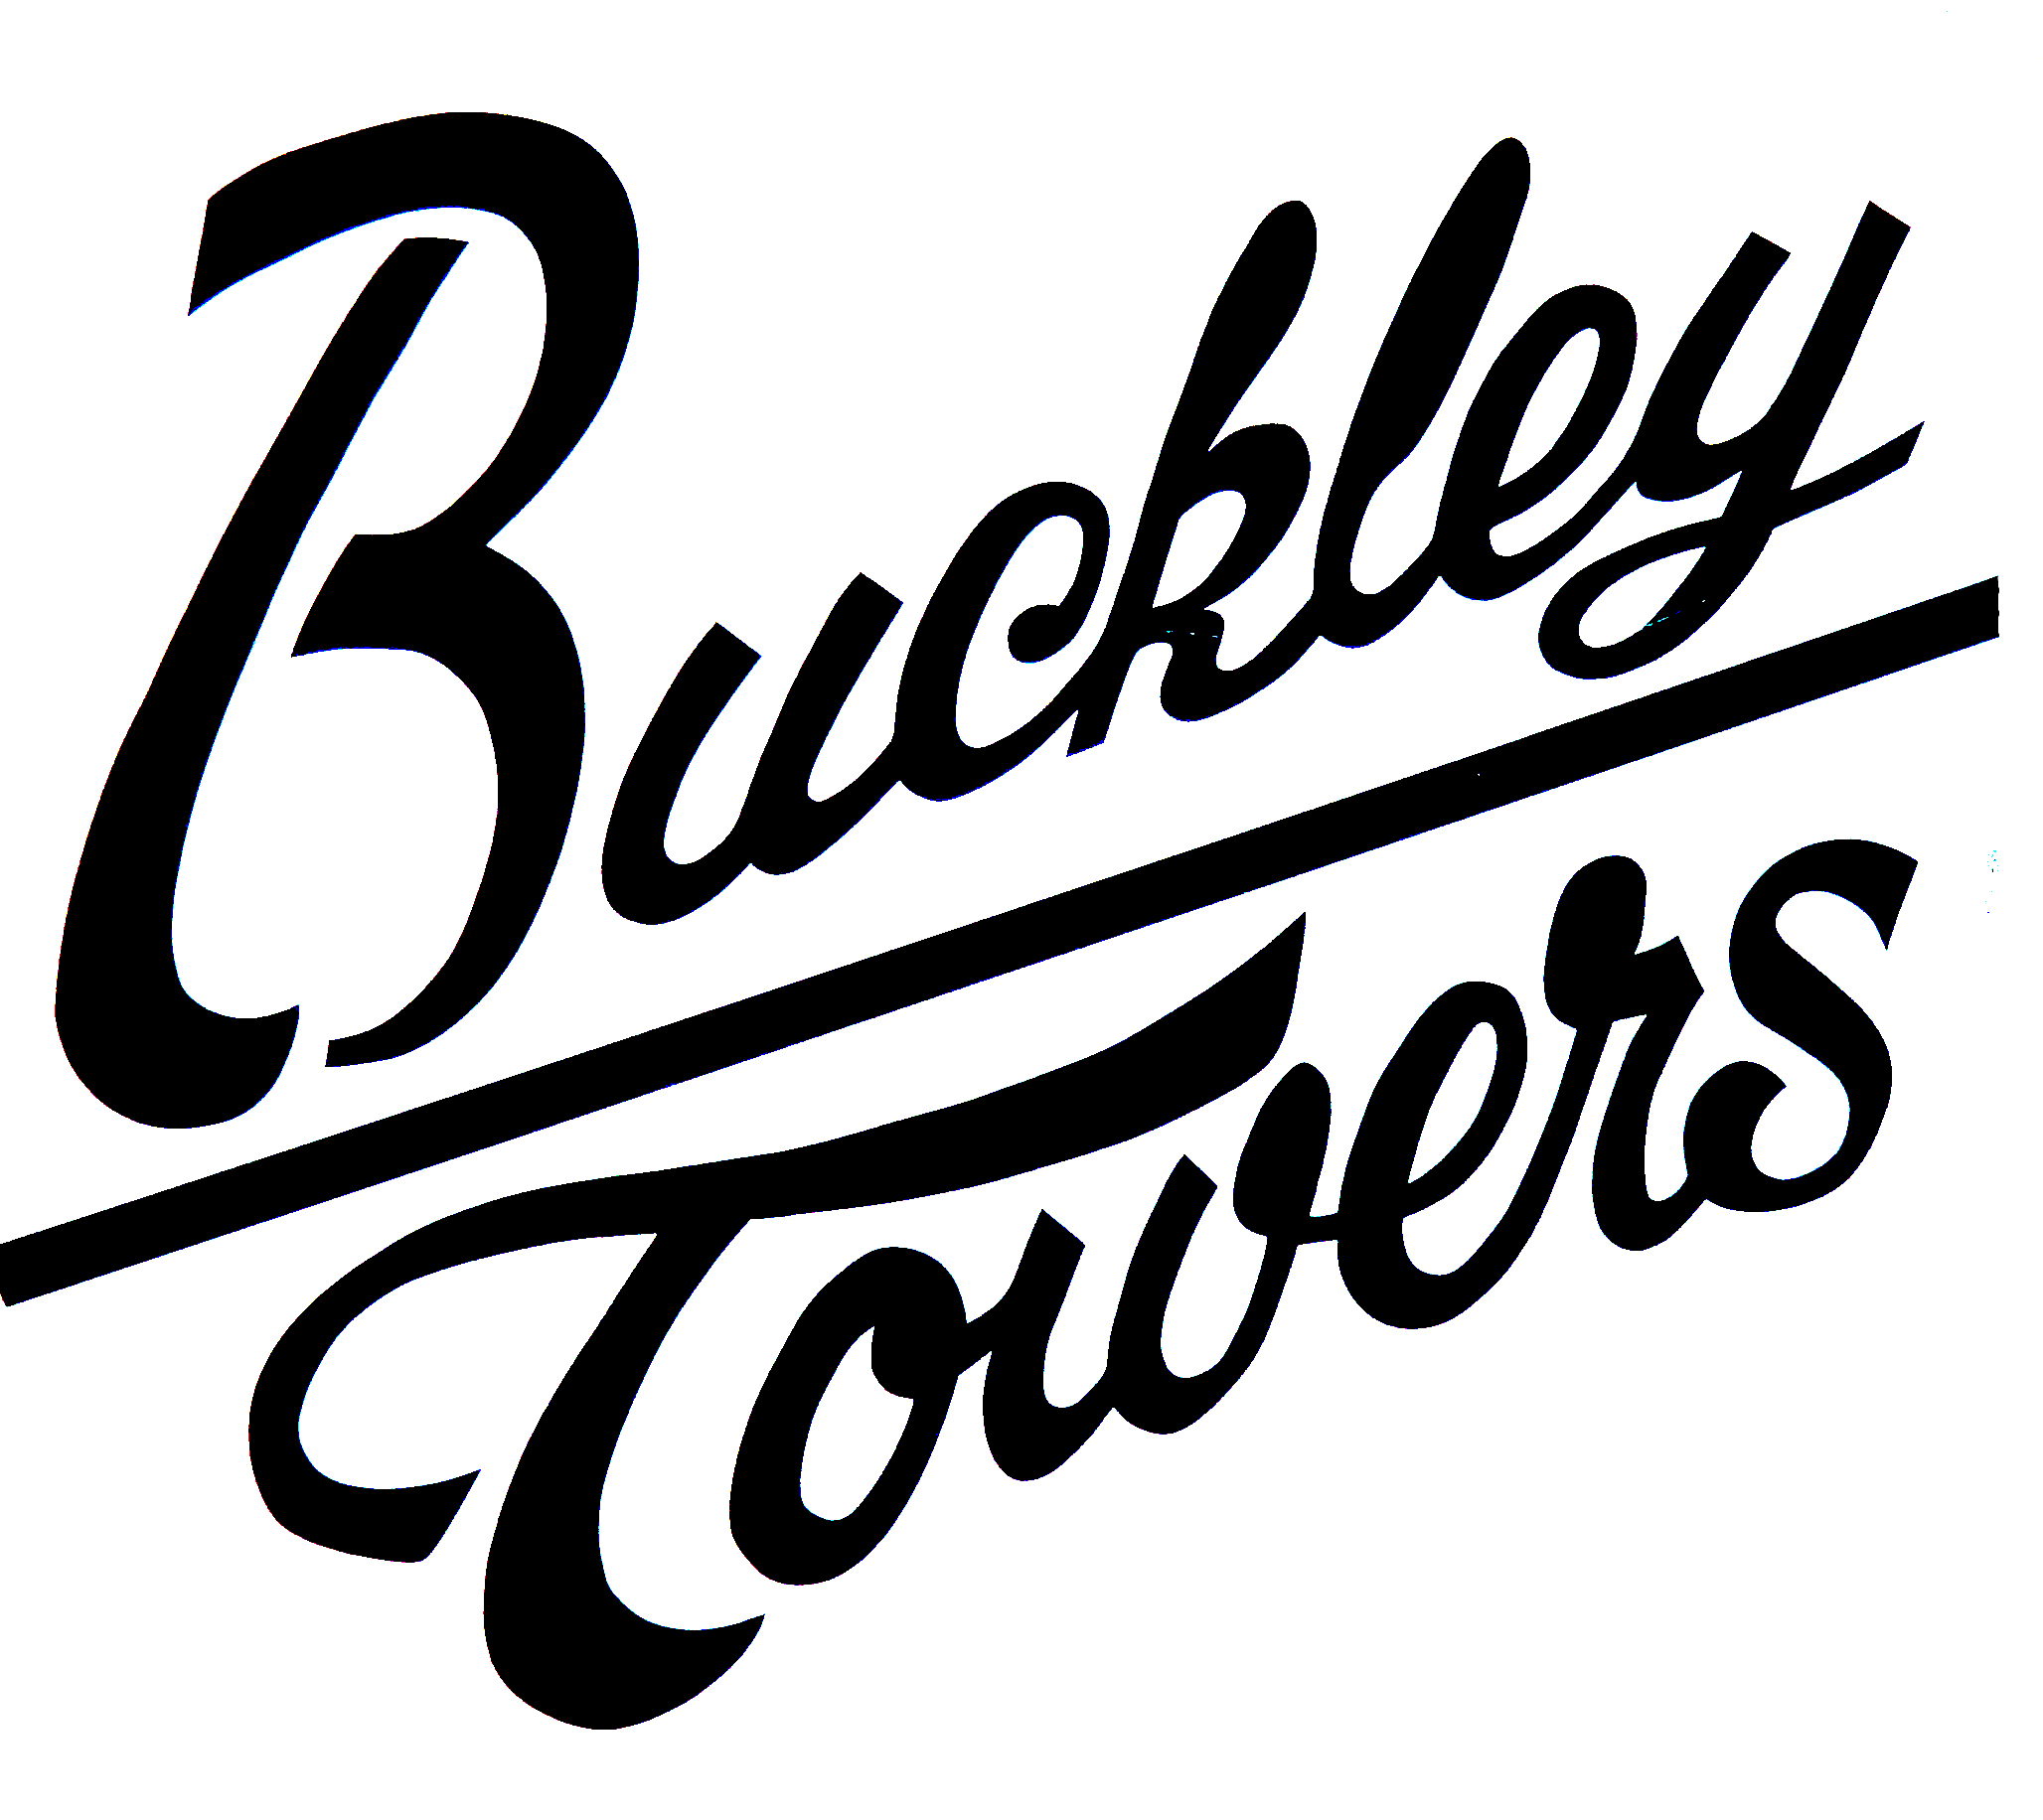  Buckley Towers